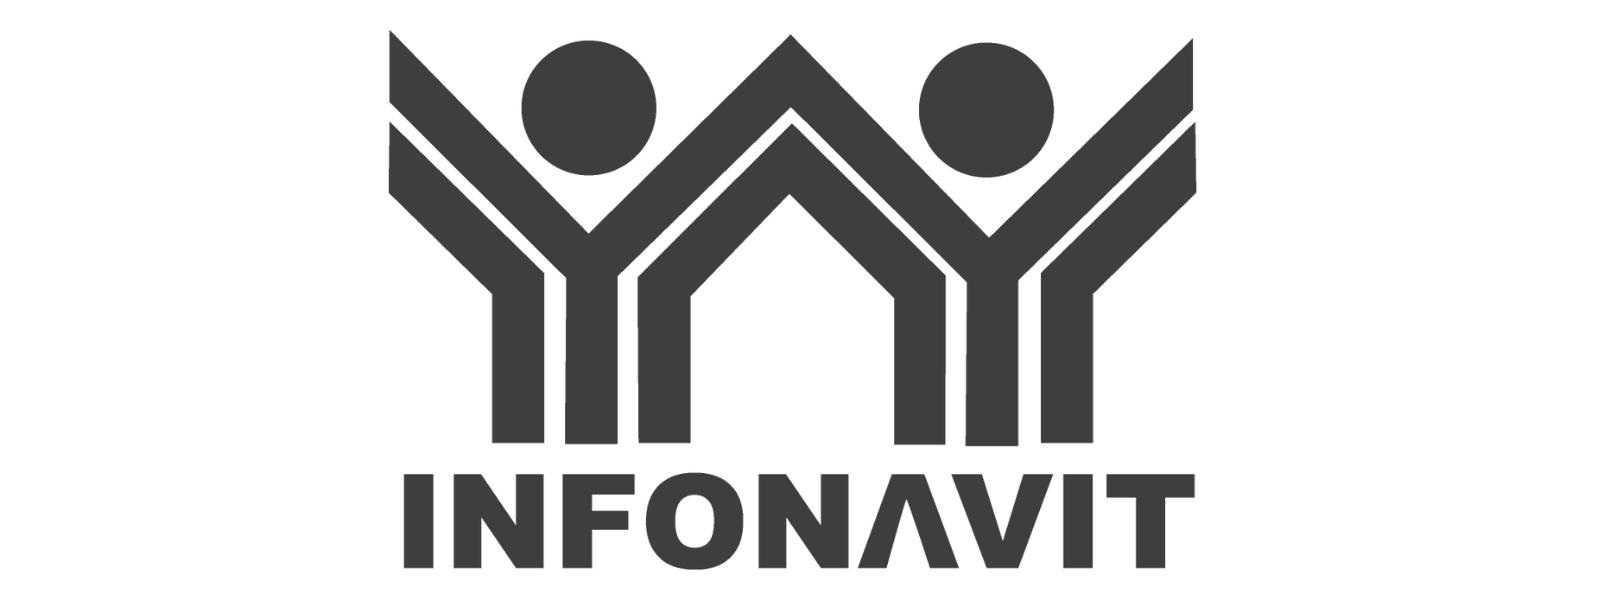 Logo INFONAVIT